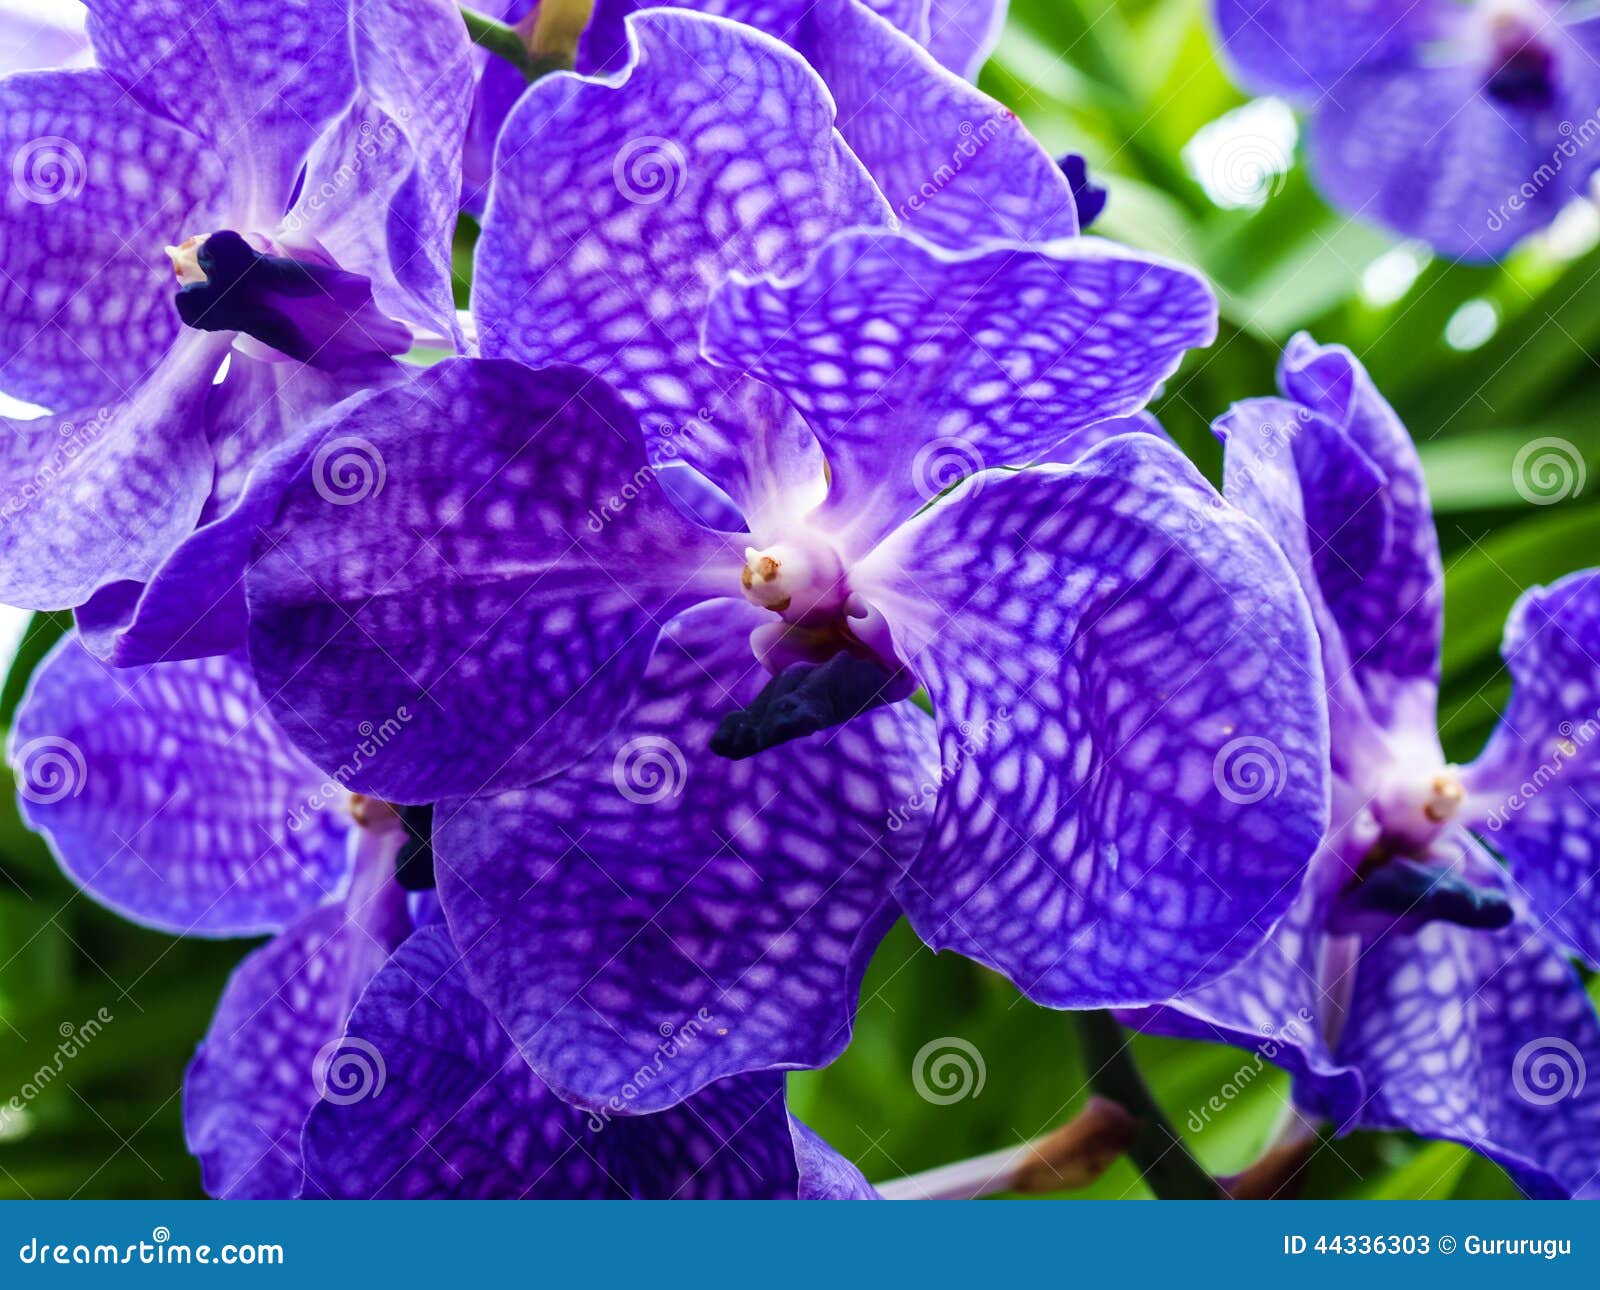 Violet Vanda Hybrid Flower in Nature Stock Image - Image of green, spring:  44336303